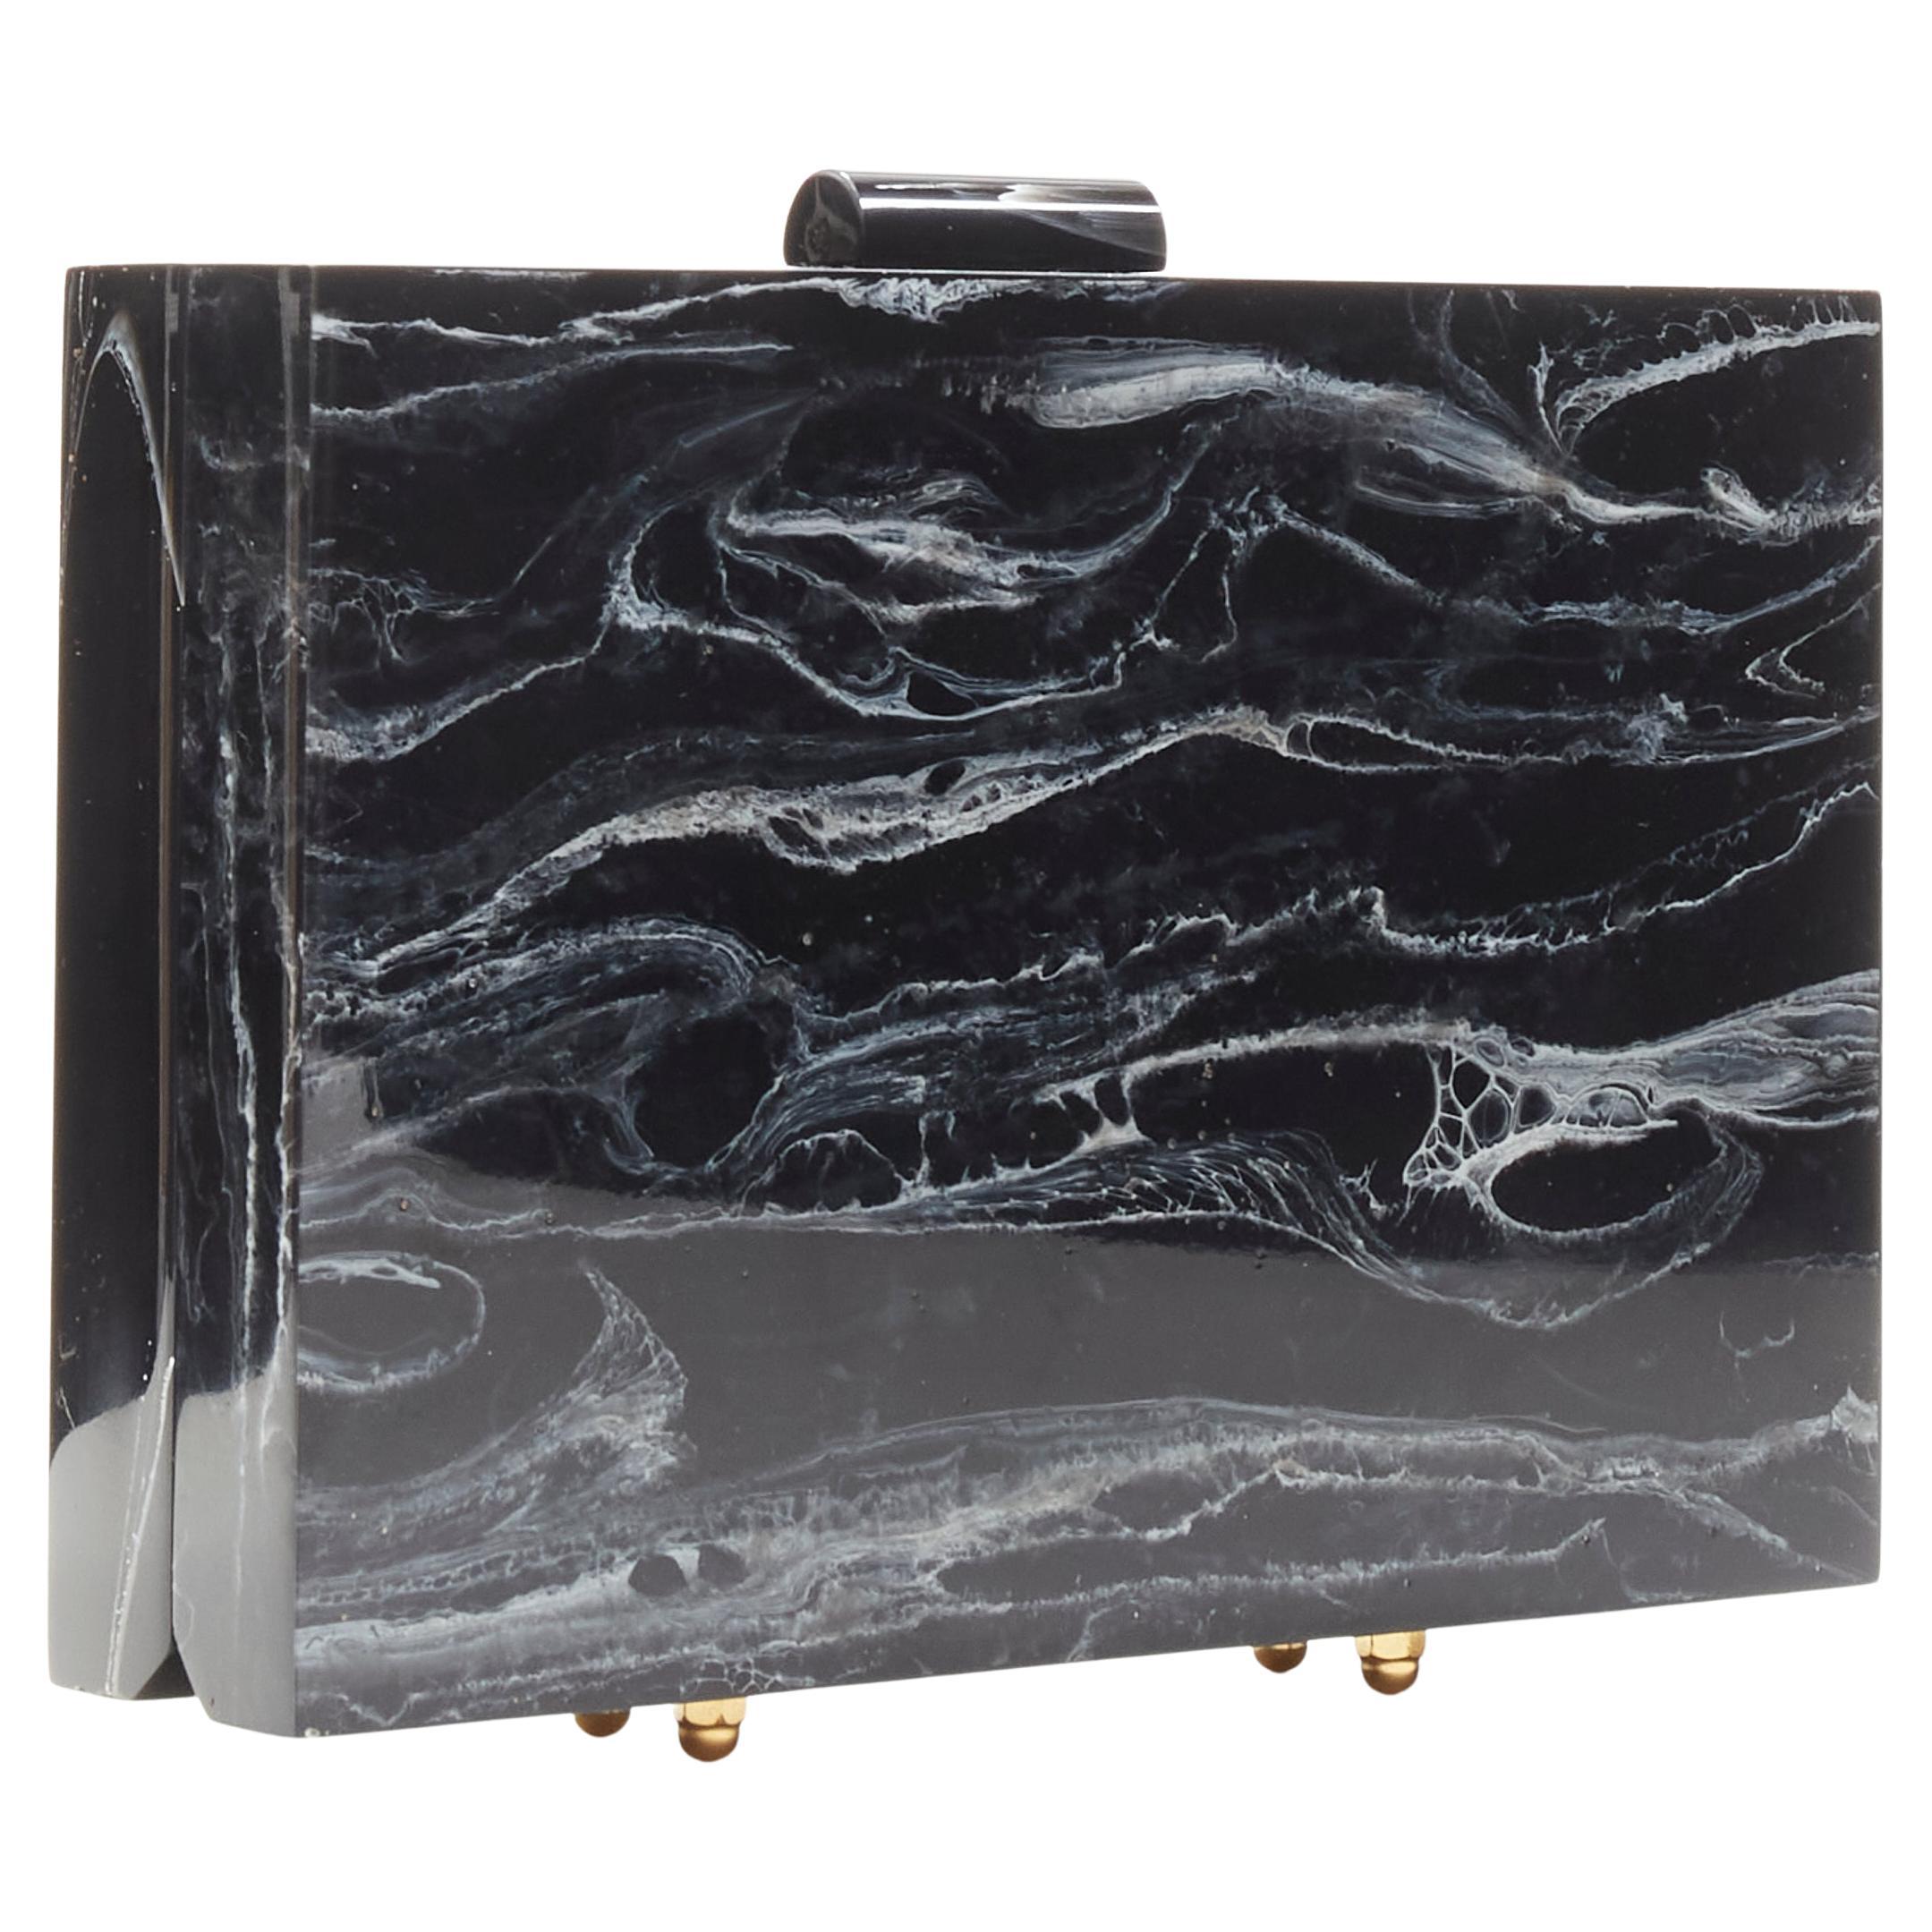 L'AFSHAR black white marble print acrylic gold hardware box clutch bag